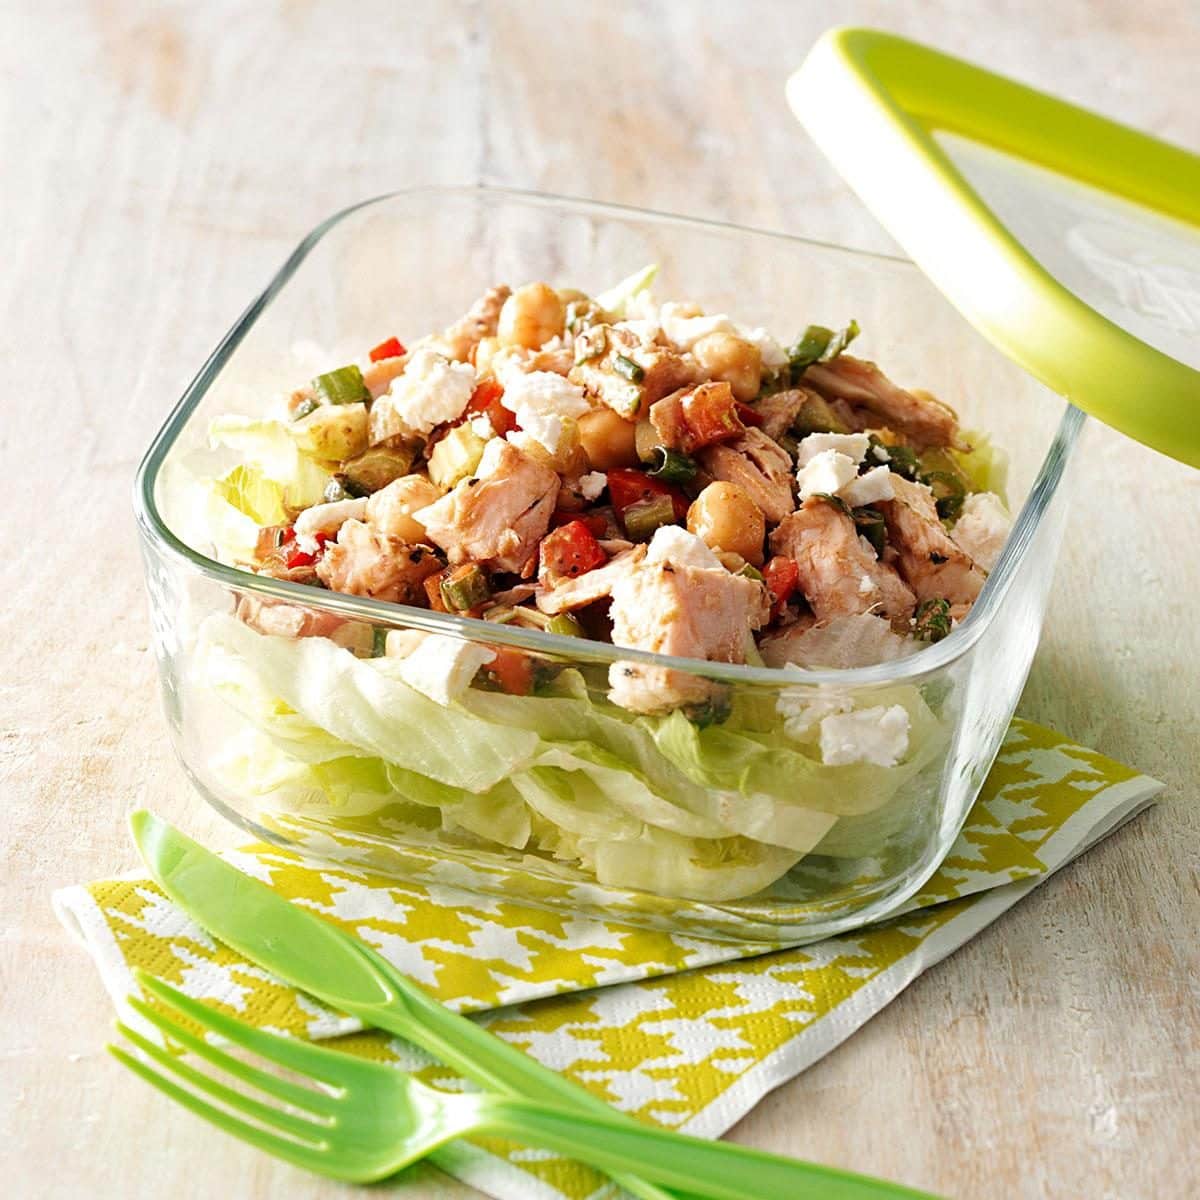 Mediterranean Tuna Salad Recipe: How to Make It